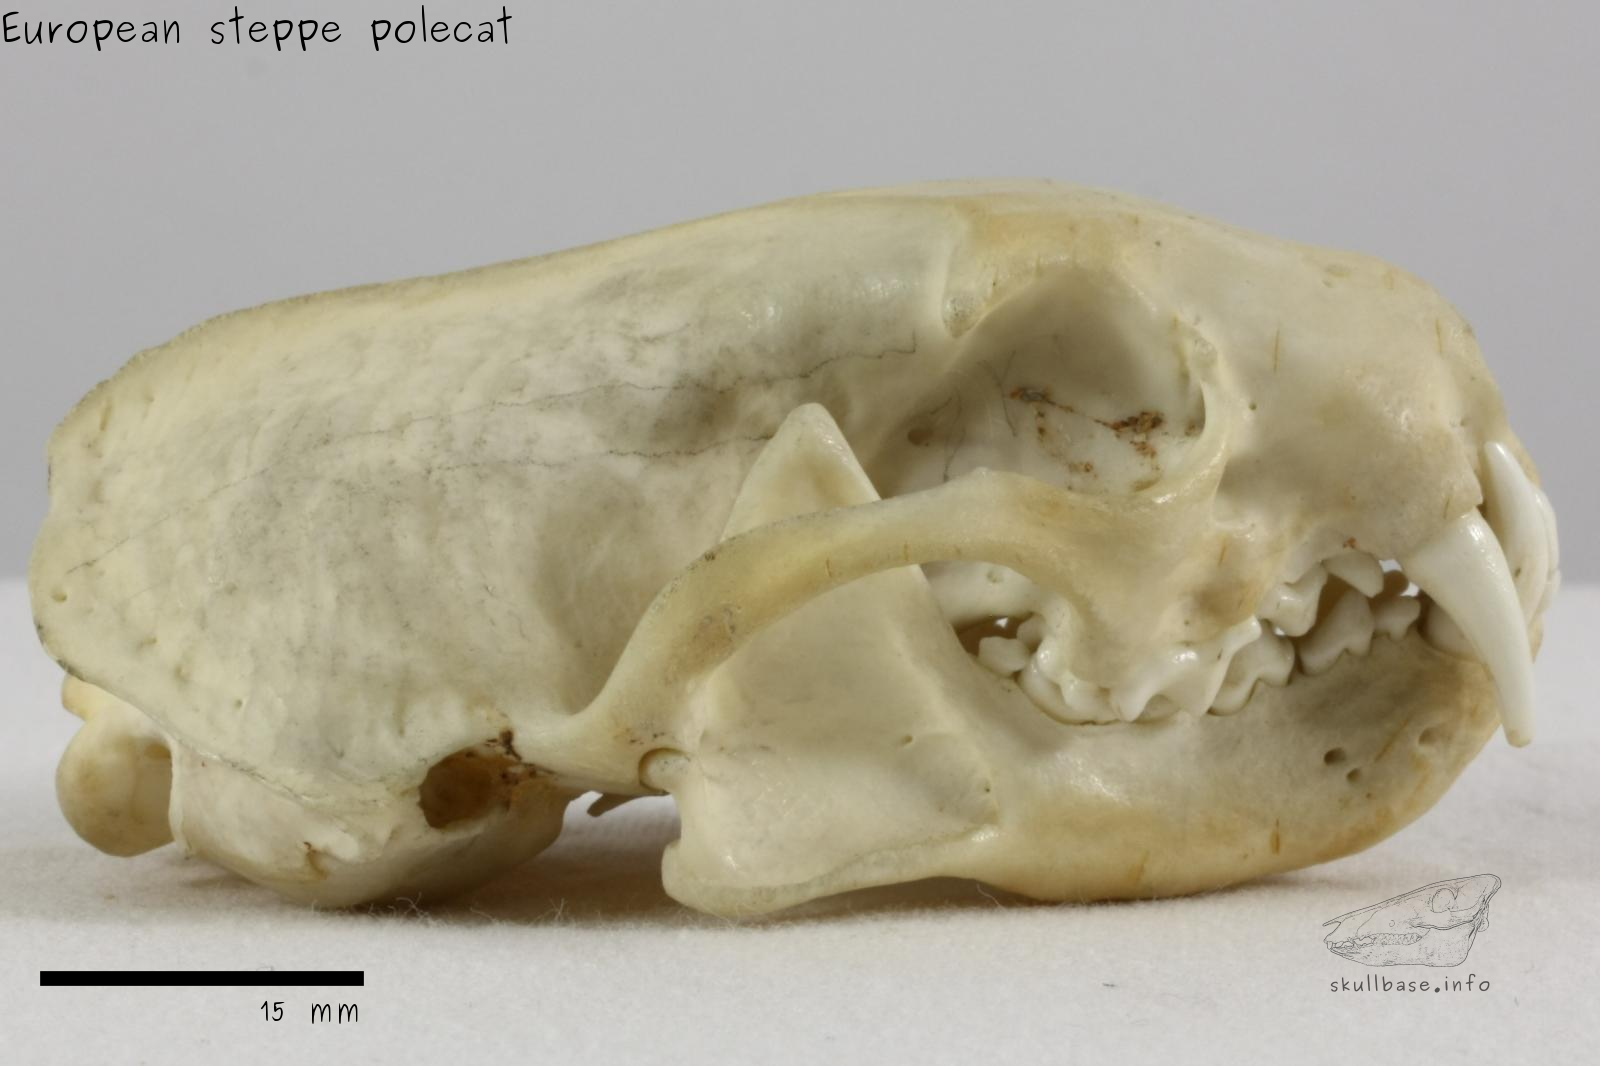 European steppe polecat (Mustela eversmanii hungarica) skull lateral view